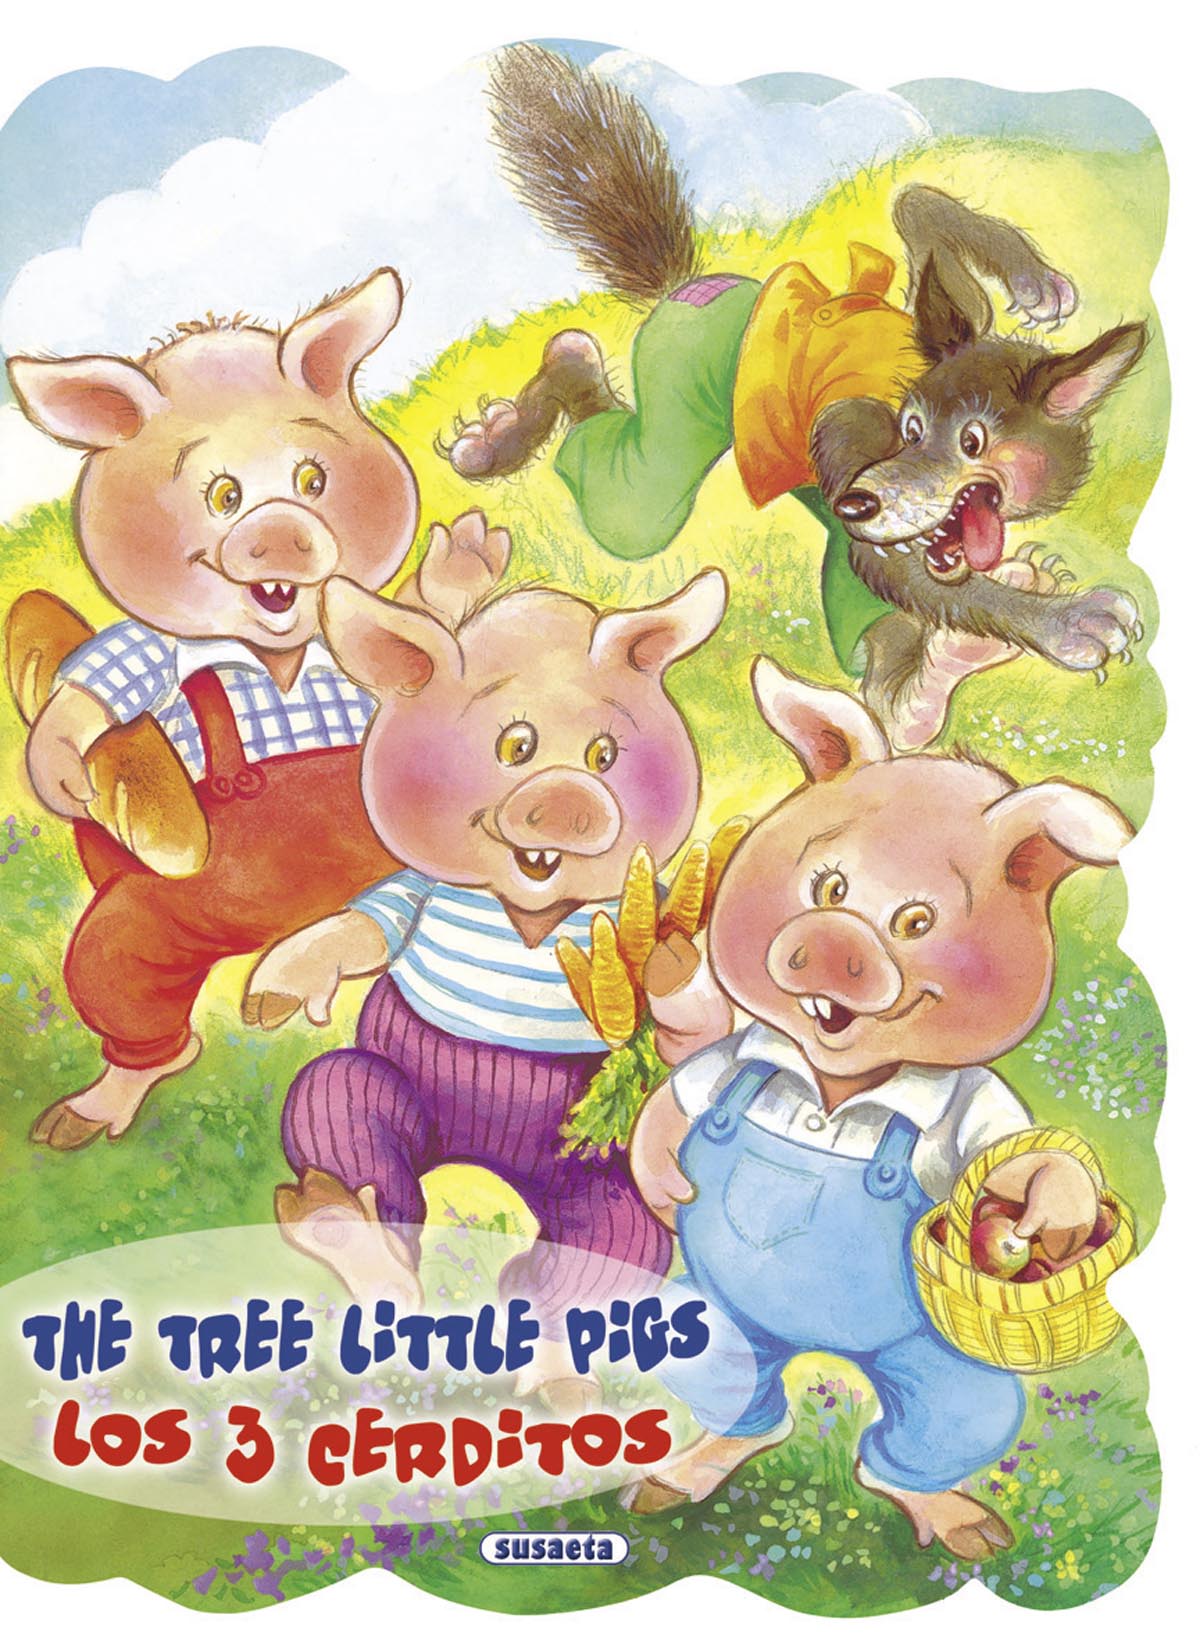 The tree little pigs - Los 3 cerditos